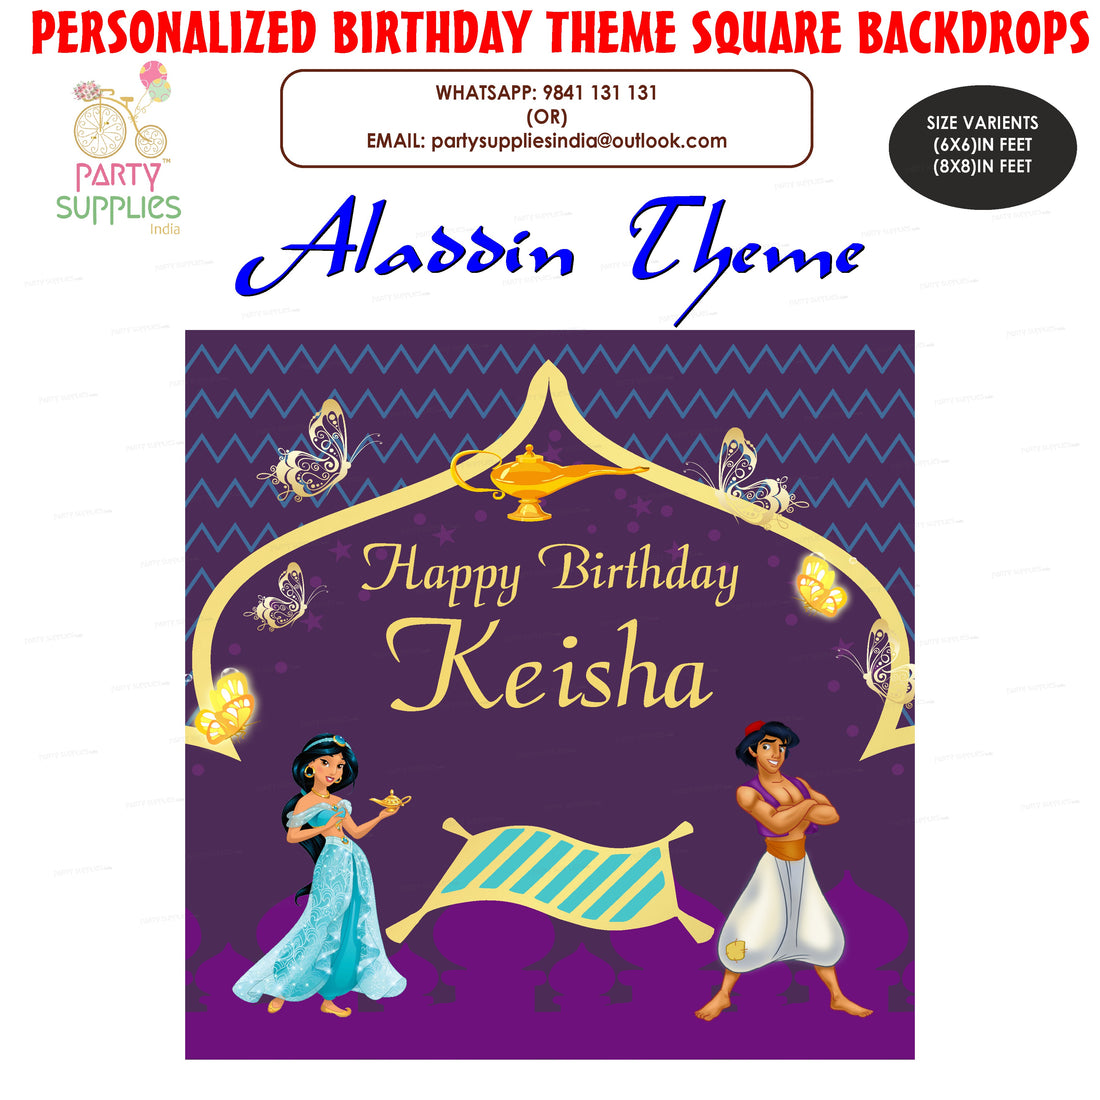 PSI Aladdin Theme Customized Square Backdrop